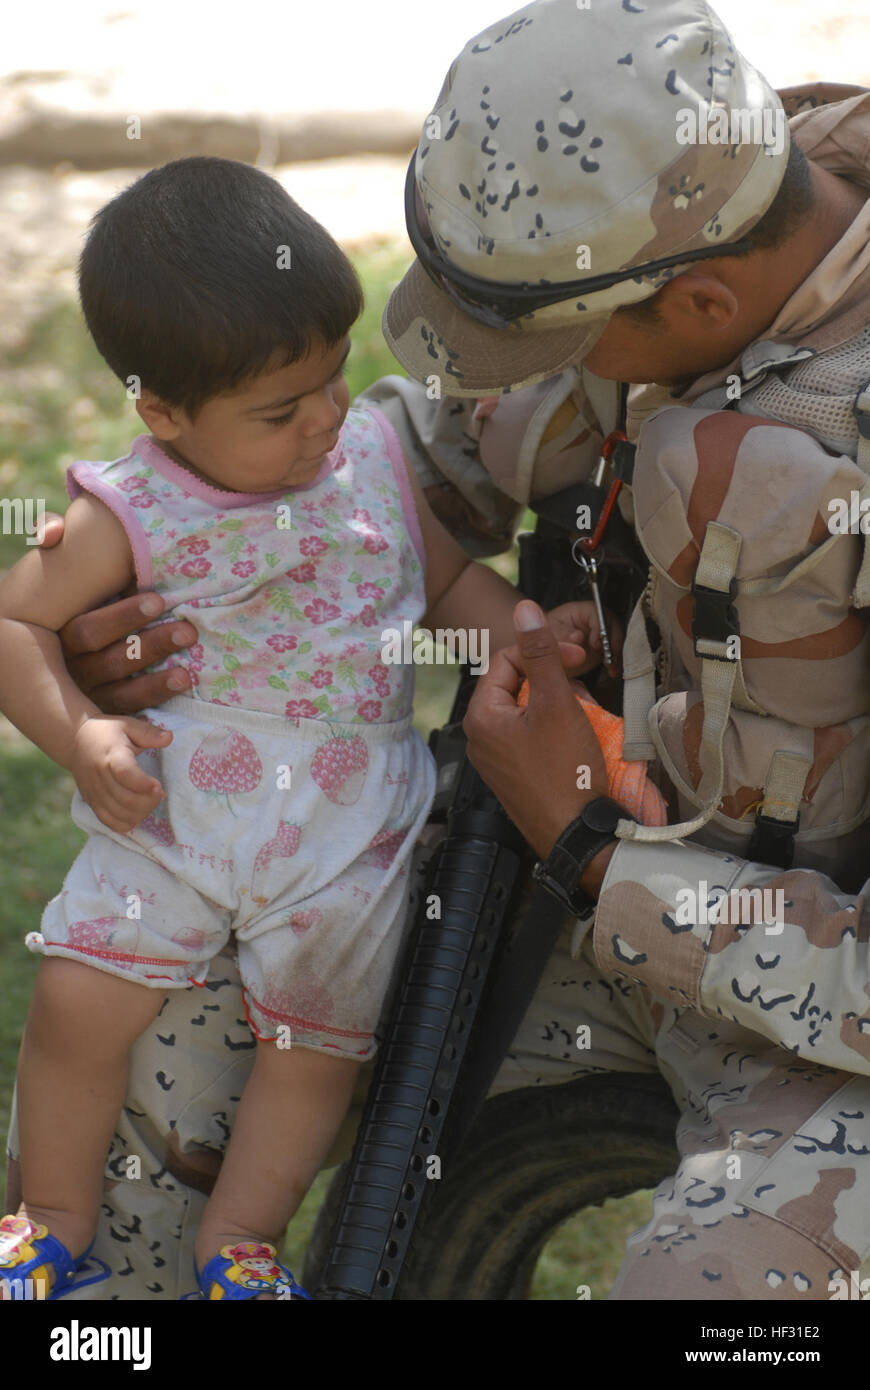 An Iraqi soldier with the 6th Iraqi army entertains an Iraqi child with a set of keys in Abu Ghraib, Iraq, on June 10. Flickr - DVIDSHUB - Patrol in Abu Ghraib Stock Photo